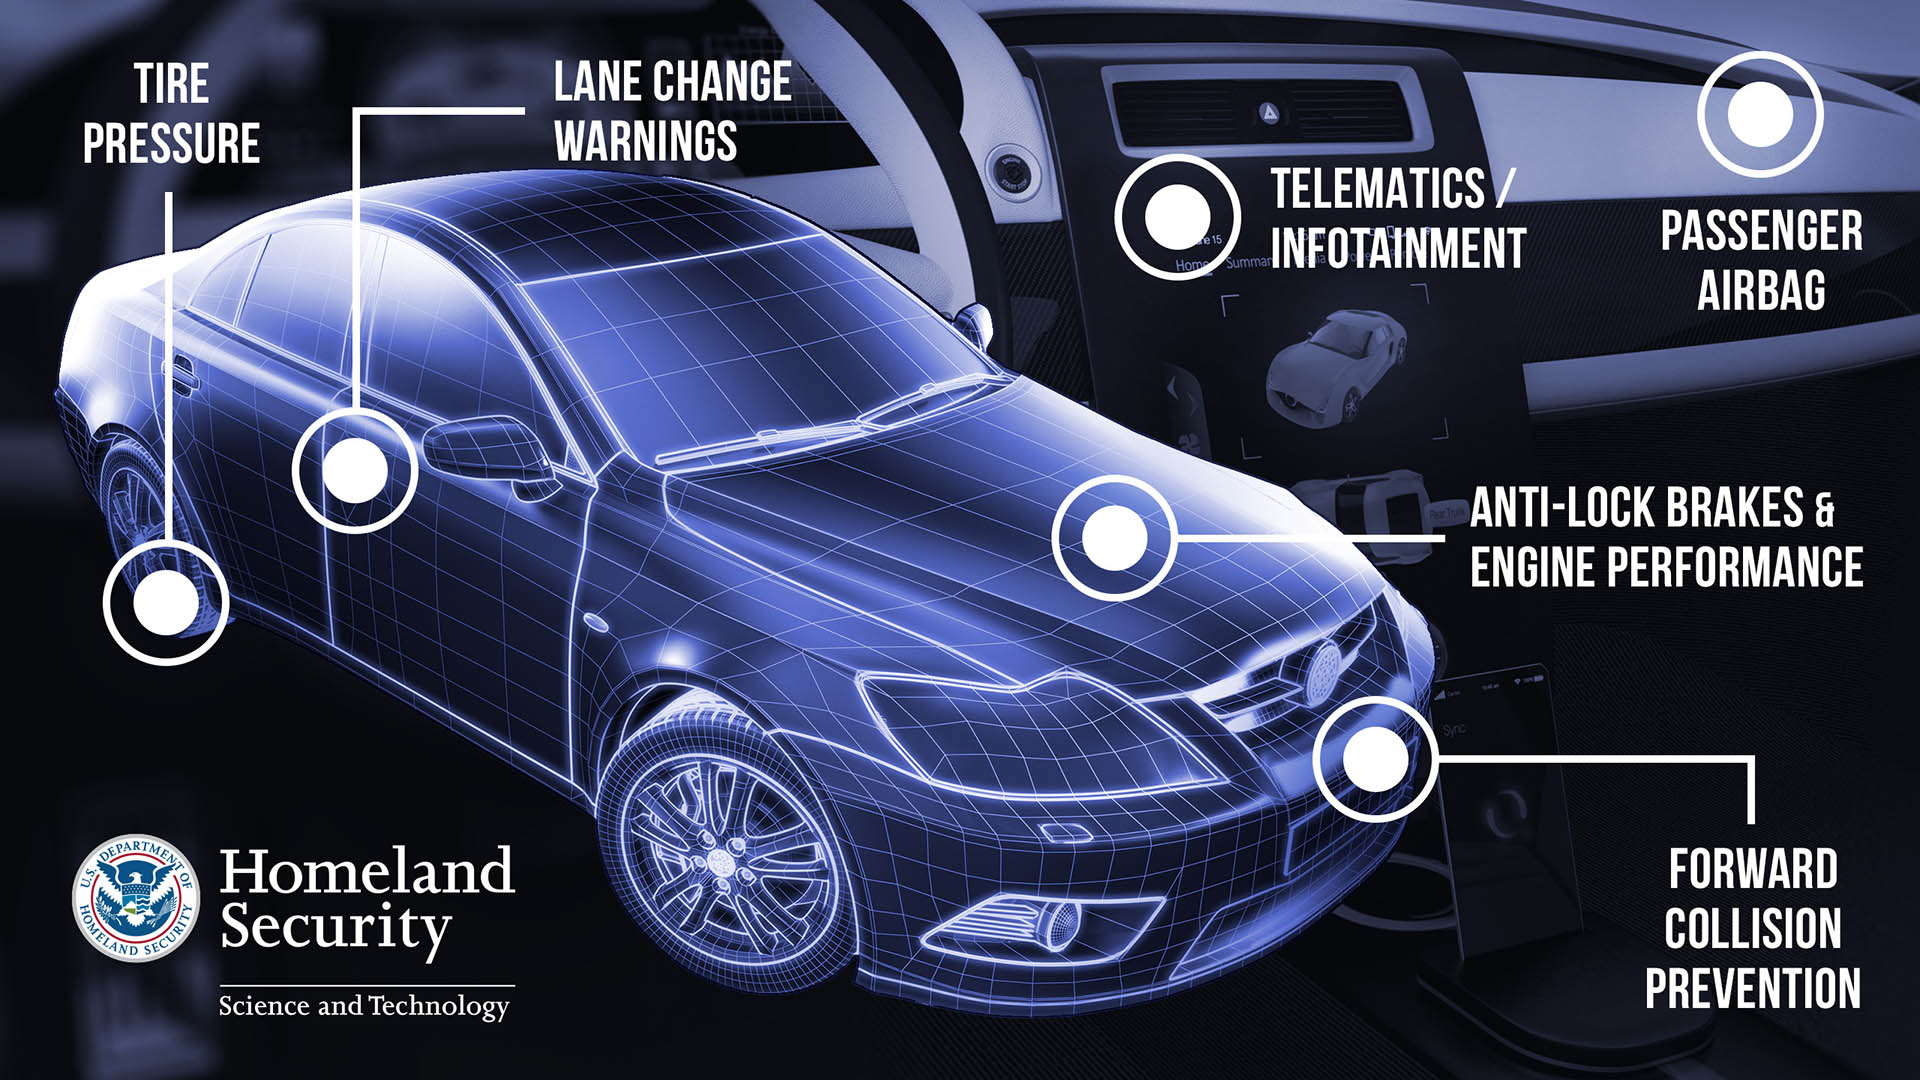 Tire Presure, Lane Change, Passenger Airbag ,Telematics/Infotainment, Anti-Lock Brakes Engine Preformance